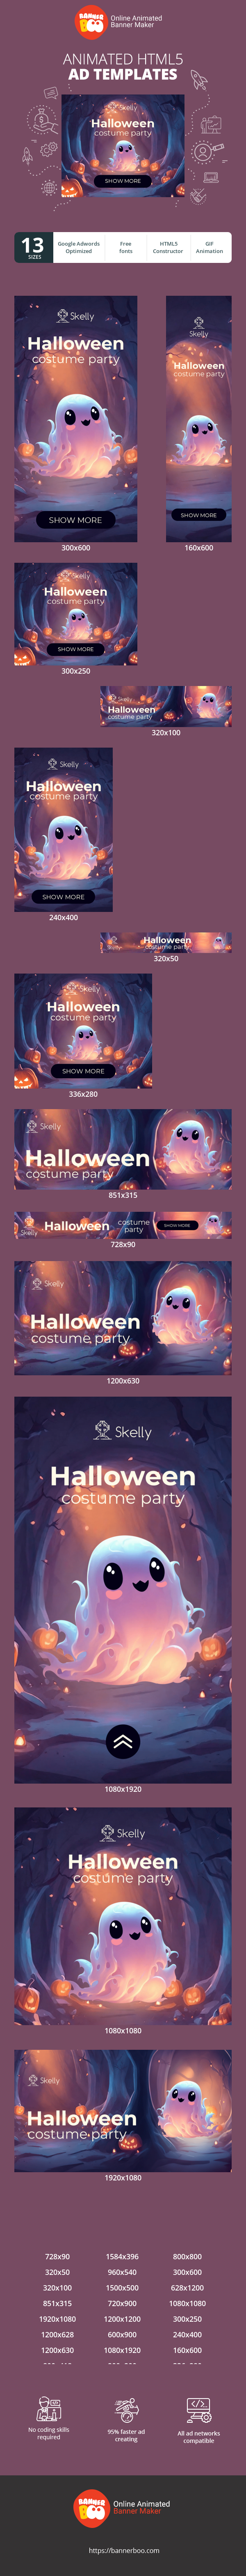 Шаблон рекламного банера — Halloween — Costume Party